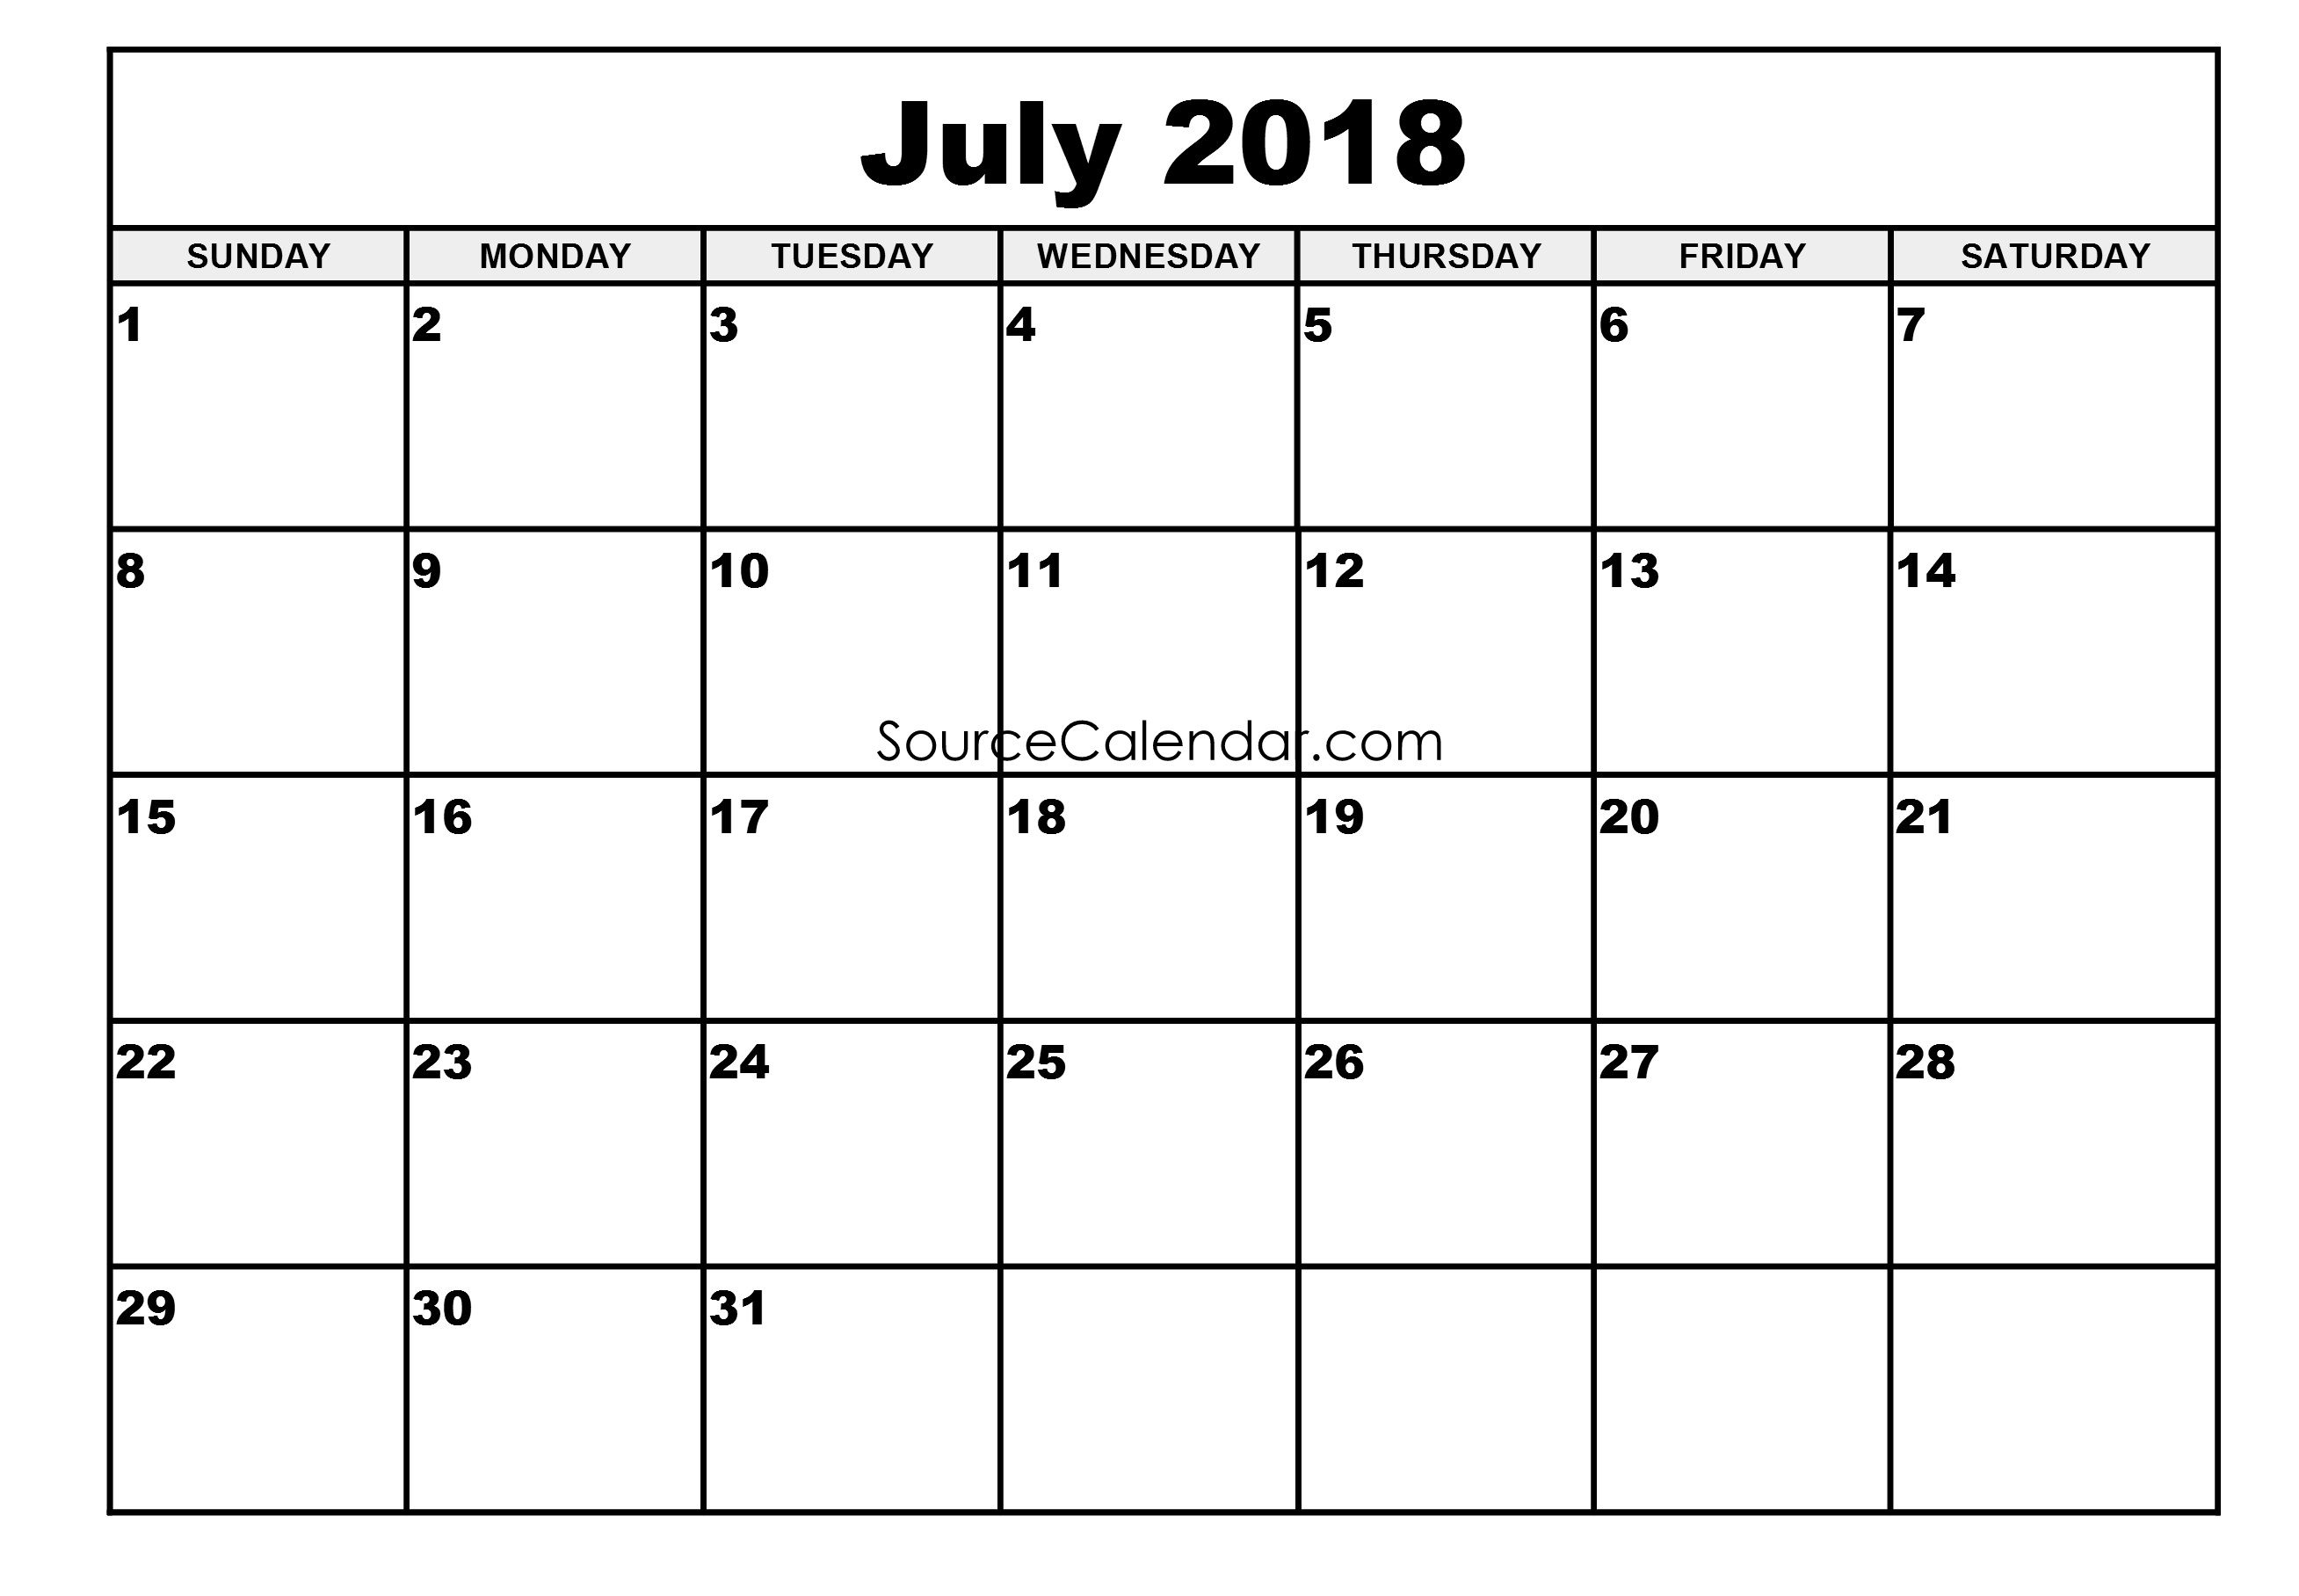 July 2018 Calendar Template Free